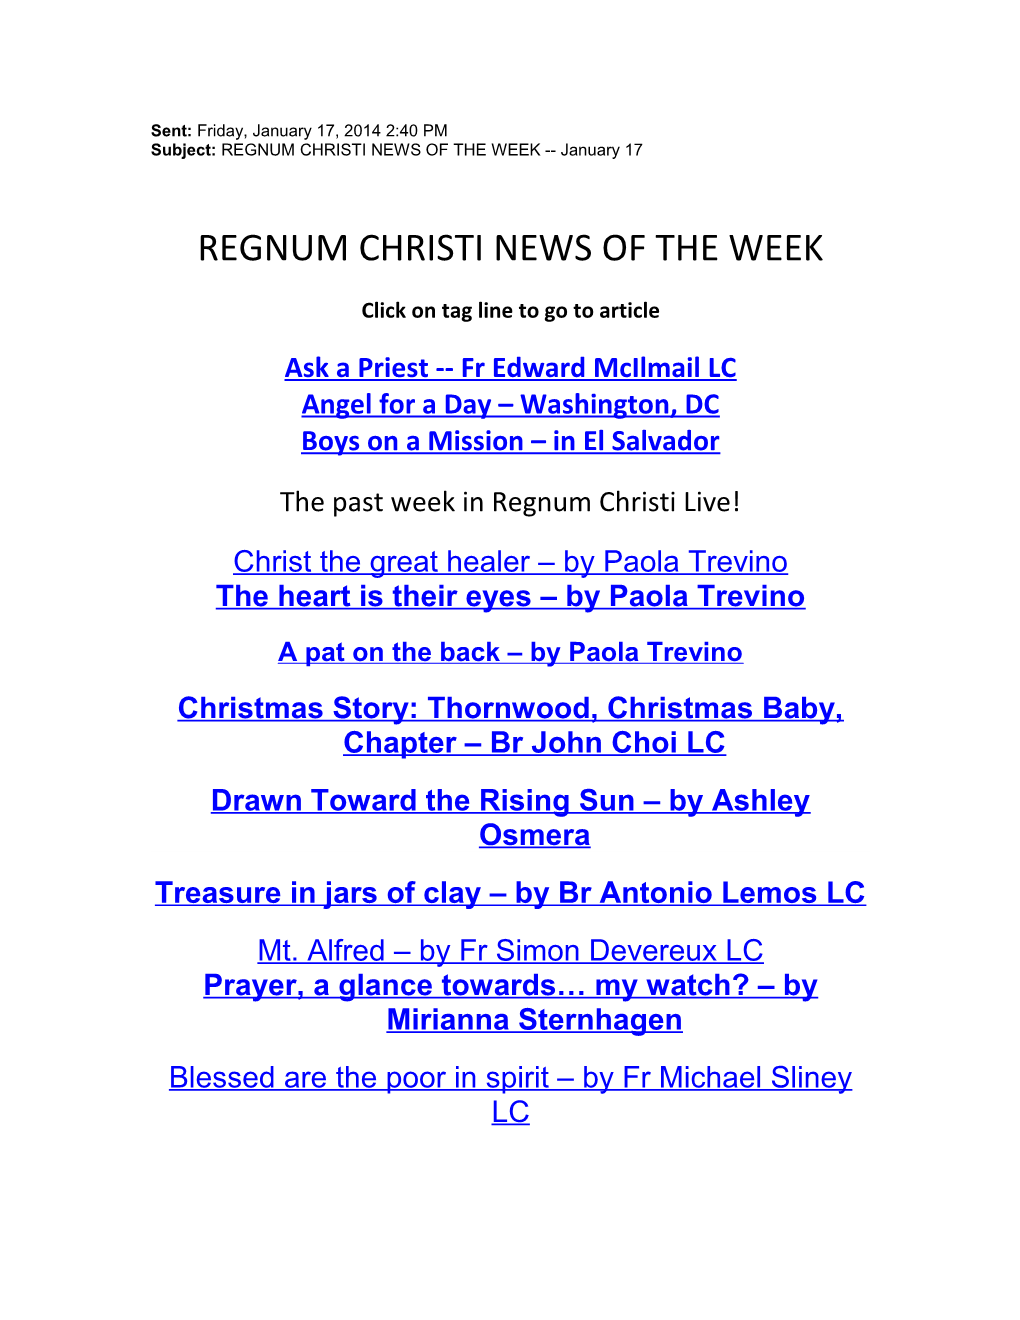 Subject: REGNUM CHRISTI NEWS of the WEEK January 17